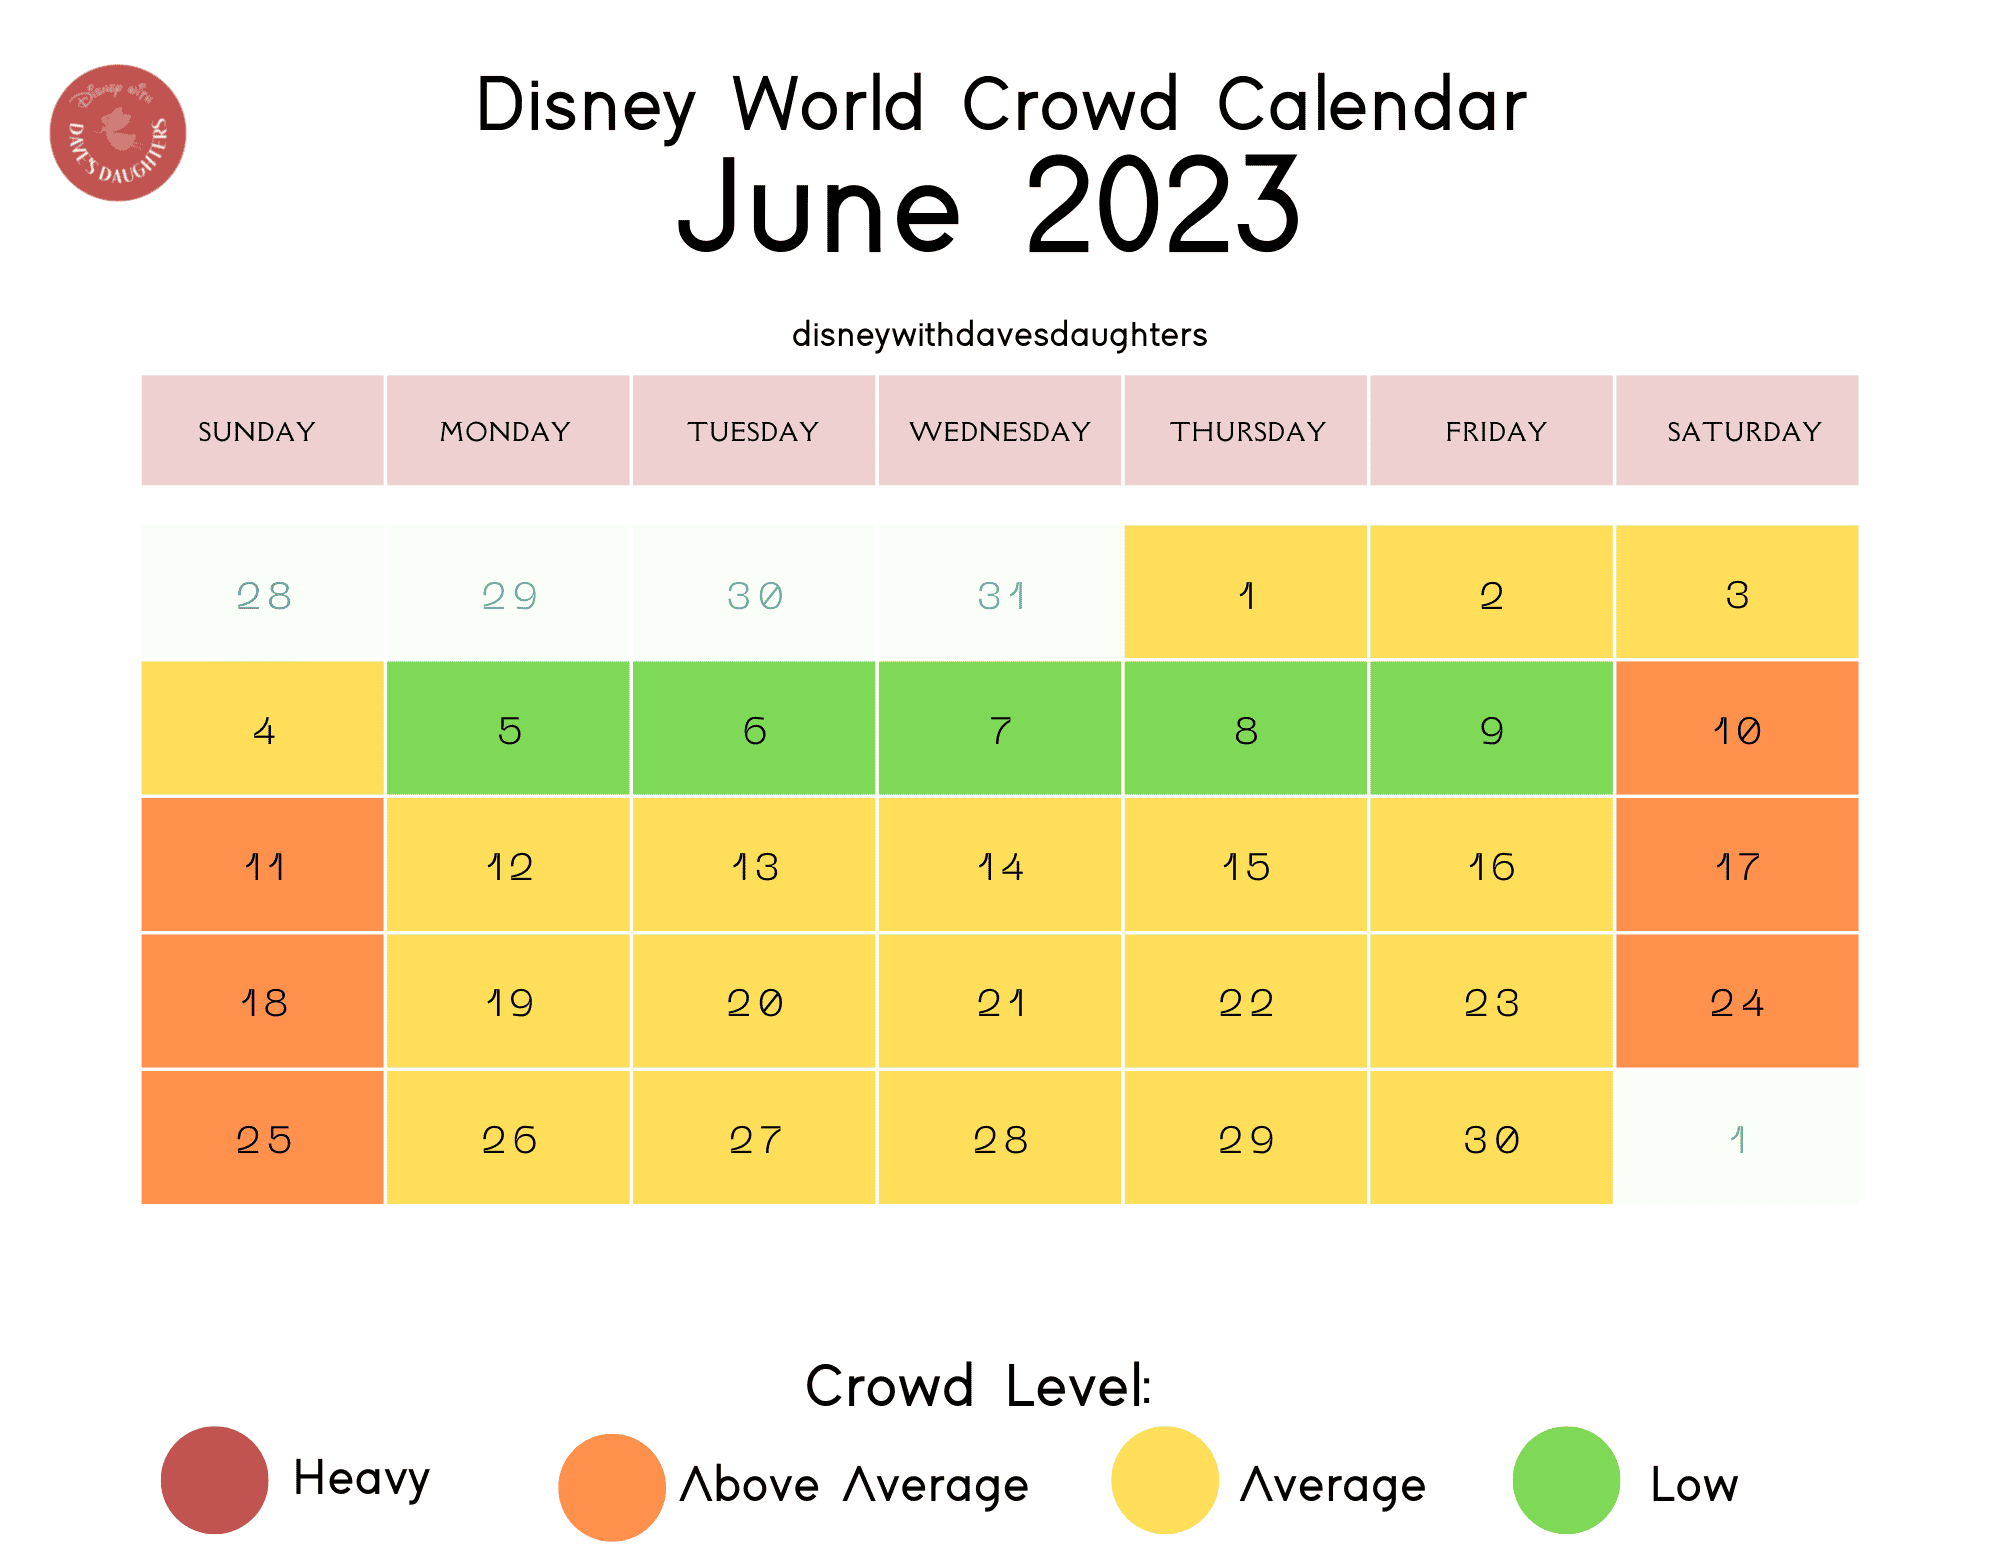 June 2023 Disney World Crowd Calendar